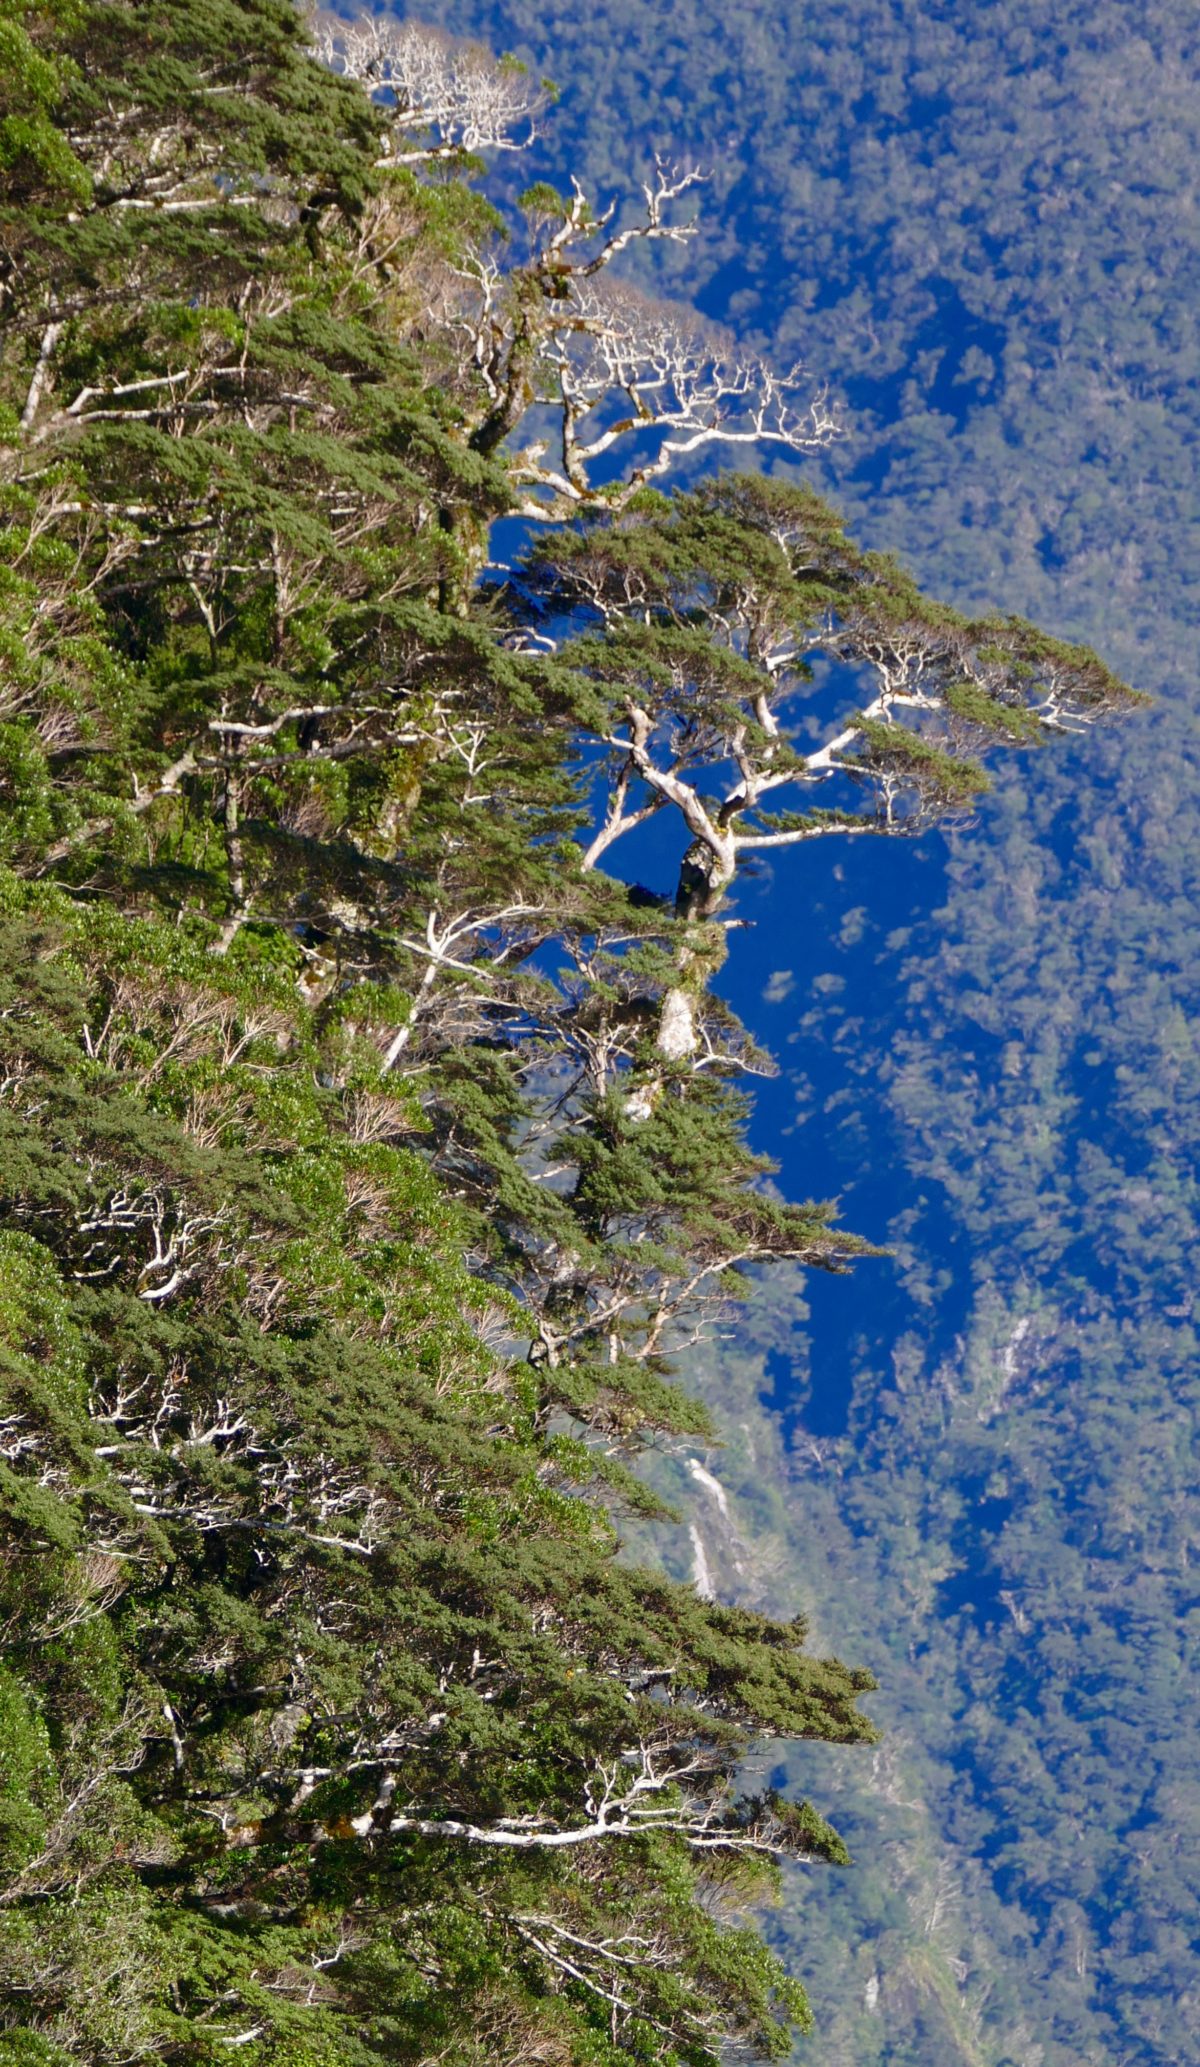 "Catastrophe forest", Doubtful Sound. All photos copyright Doug Spencer.